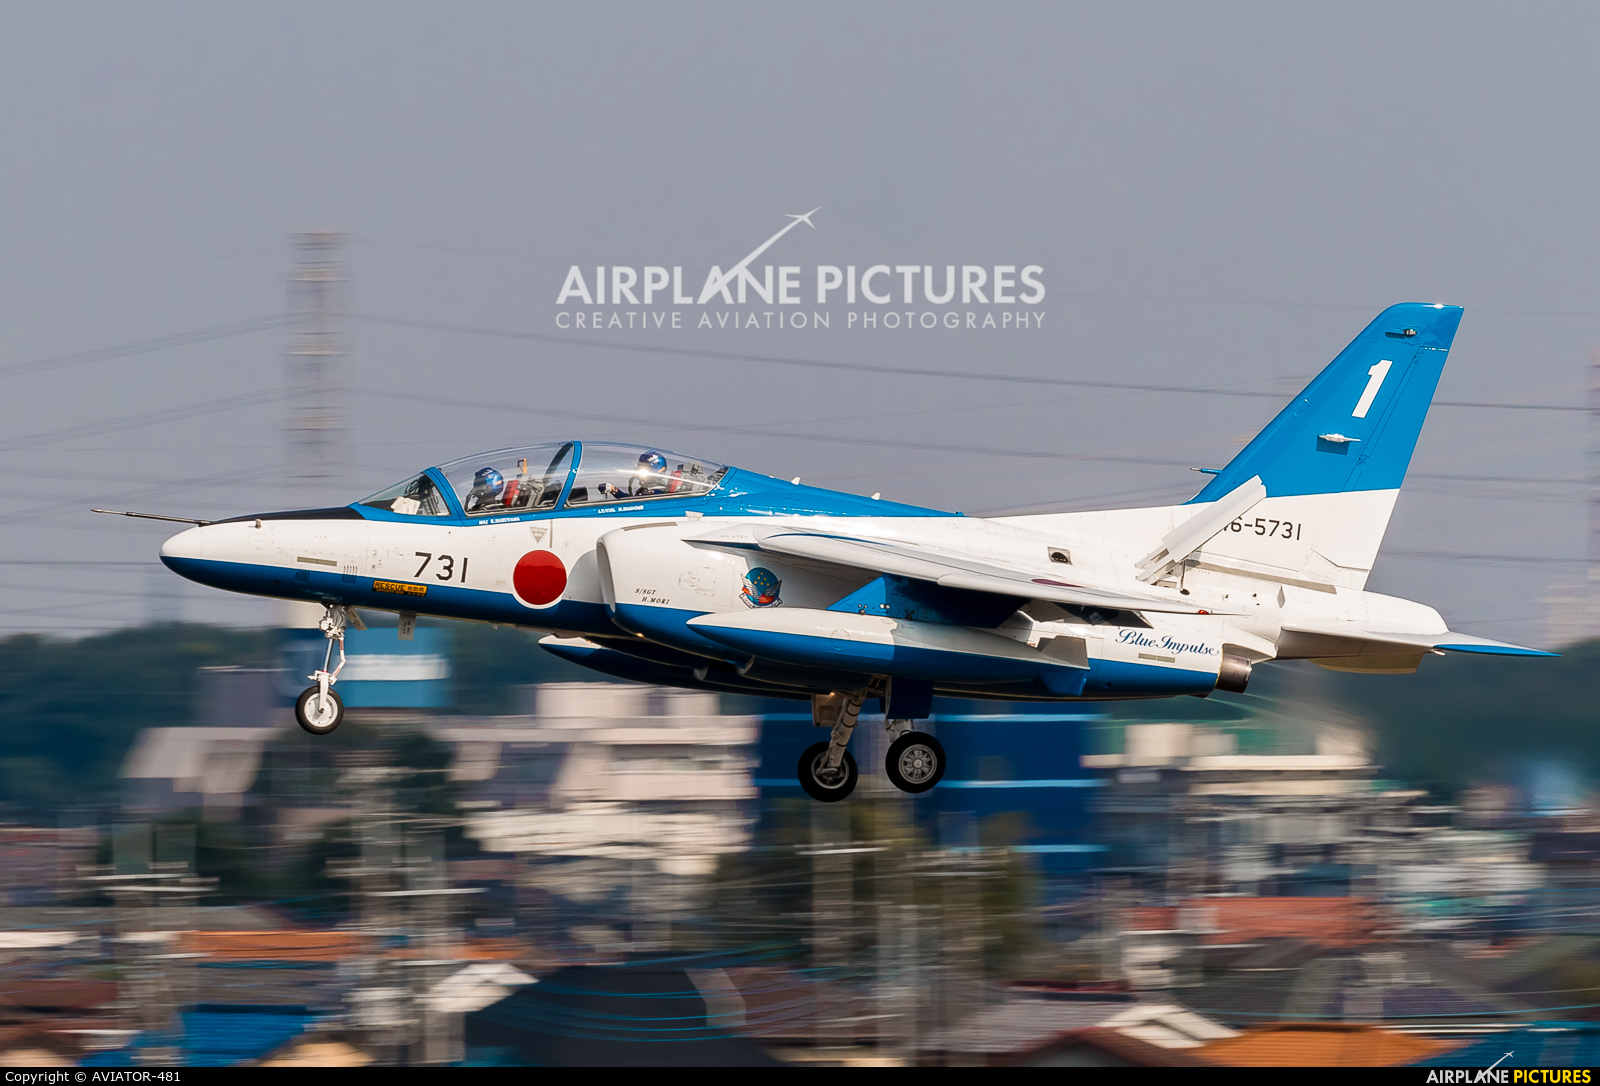 Japan - ASDF: Blue Impulse 46-5731 aircraft at Iruma AB